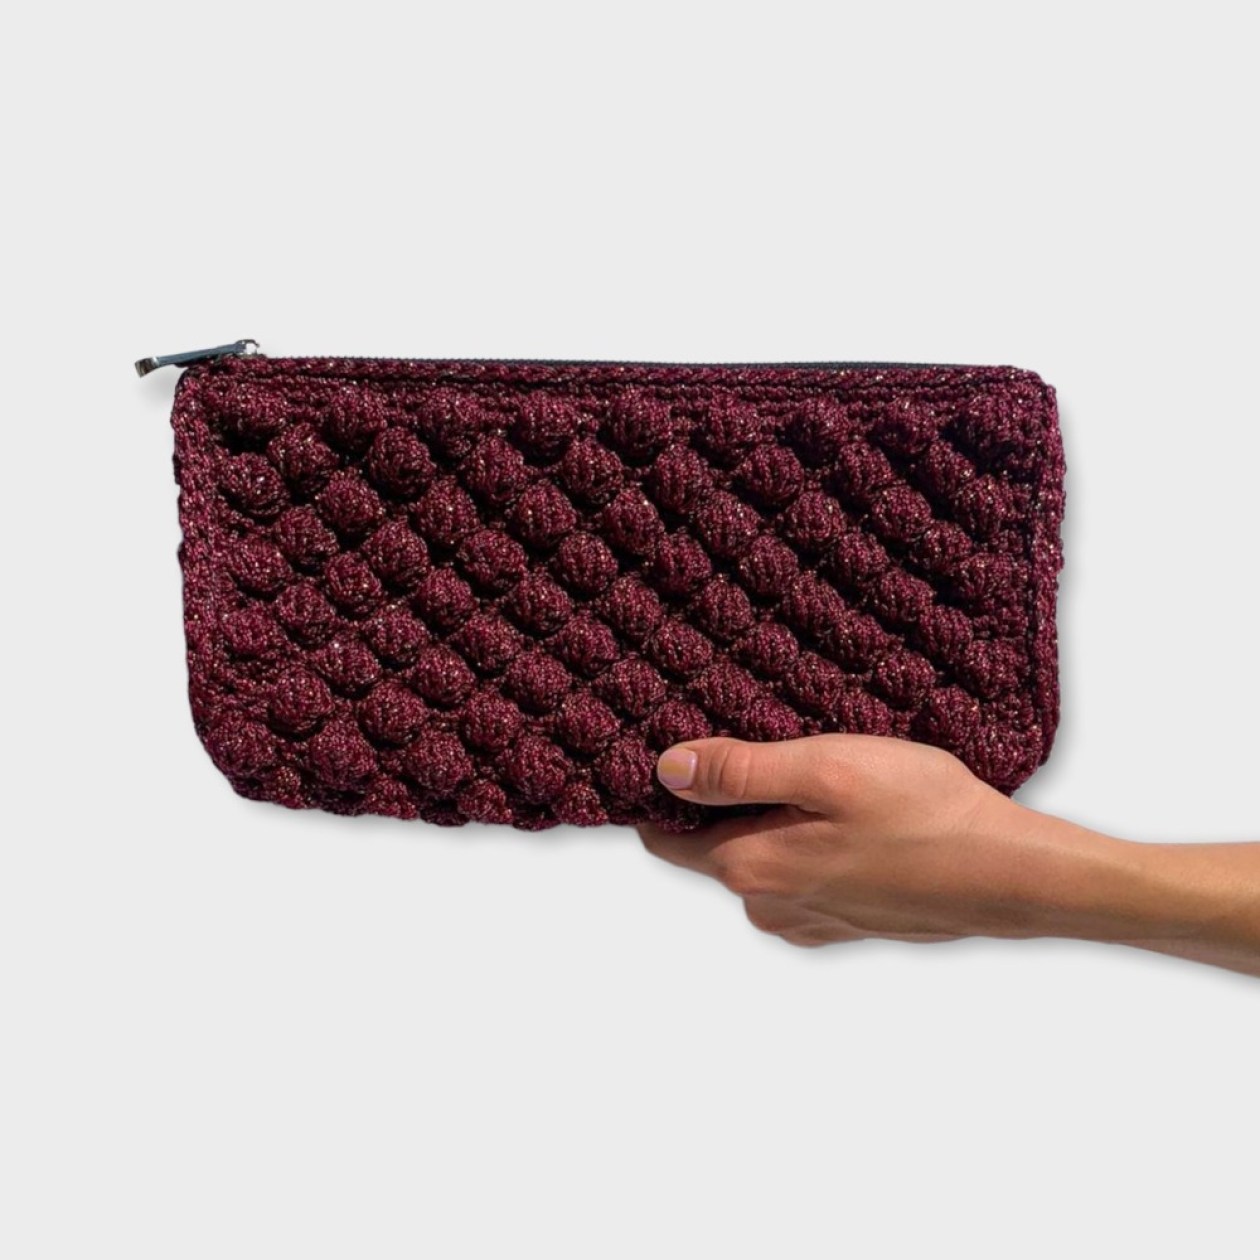 Crochet  Envelope  Medium Bag with leather parts